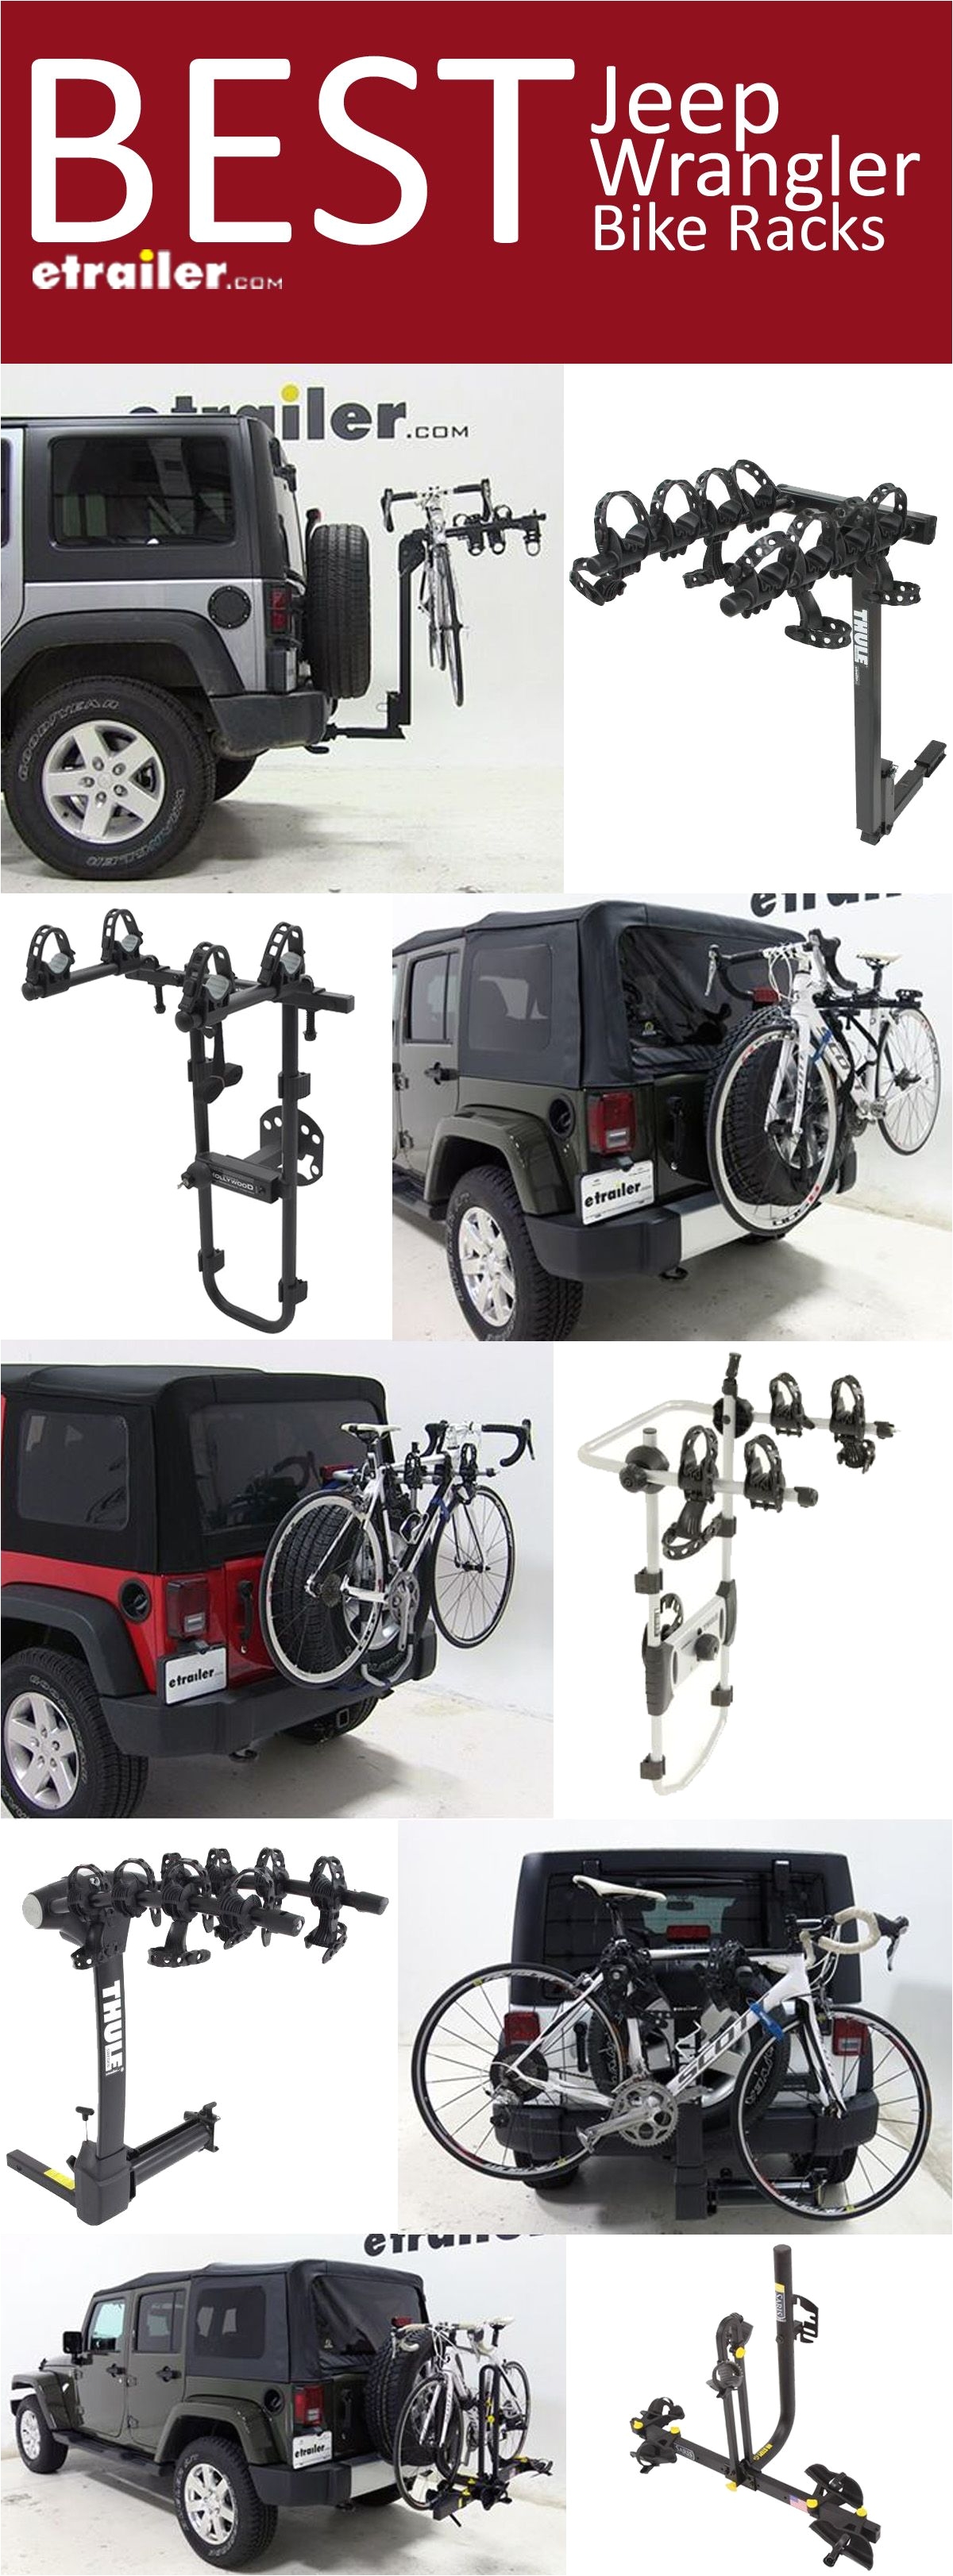 Bike Rack for Travel Trailer Advantage Sportsrack Glideaway2 Deluxe 4 Bike Carrier Pinterest